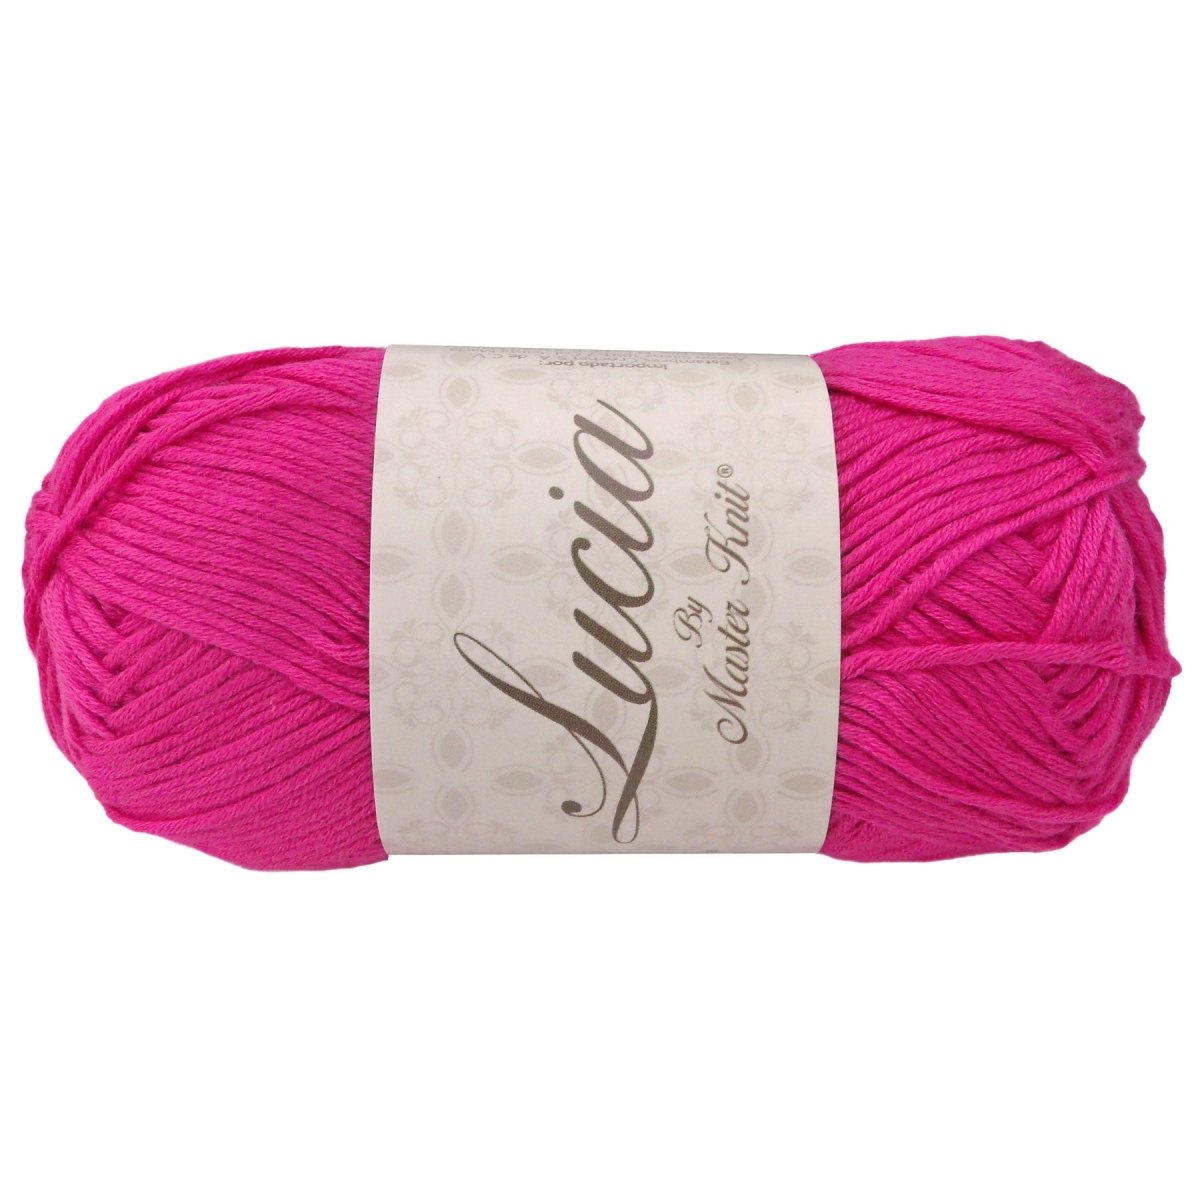 LUCIA - Crochetstores9627-243